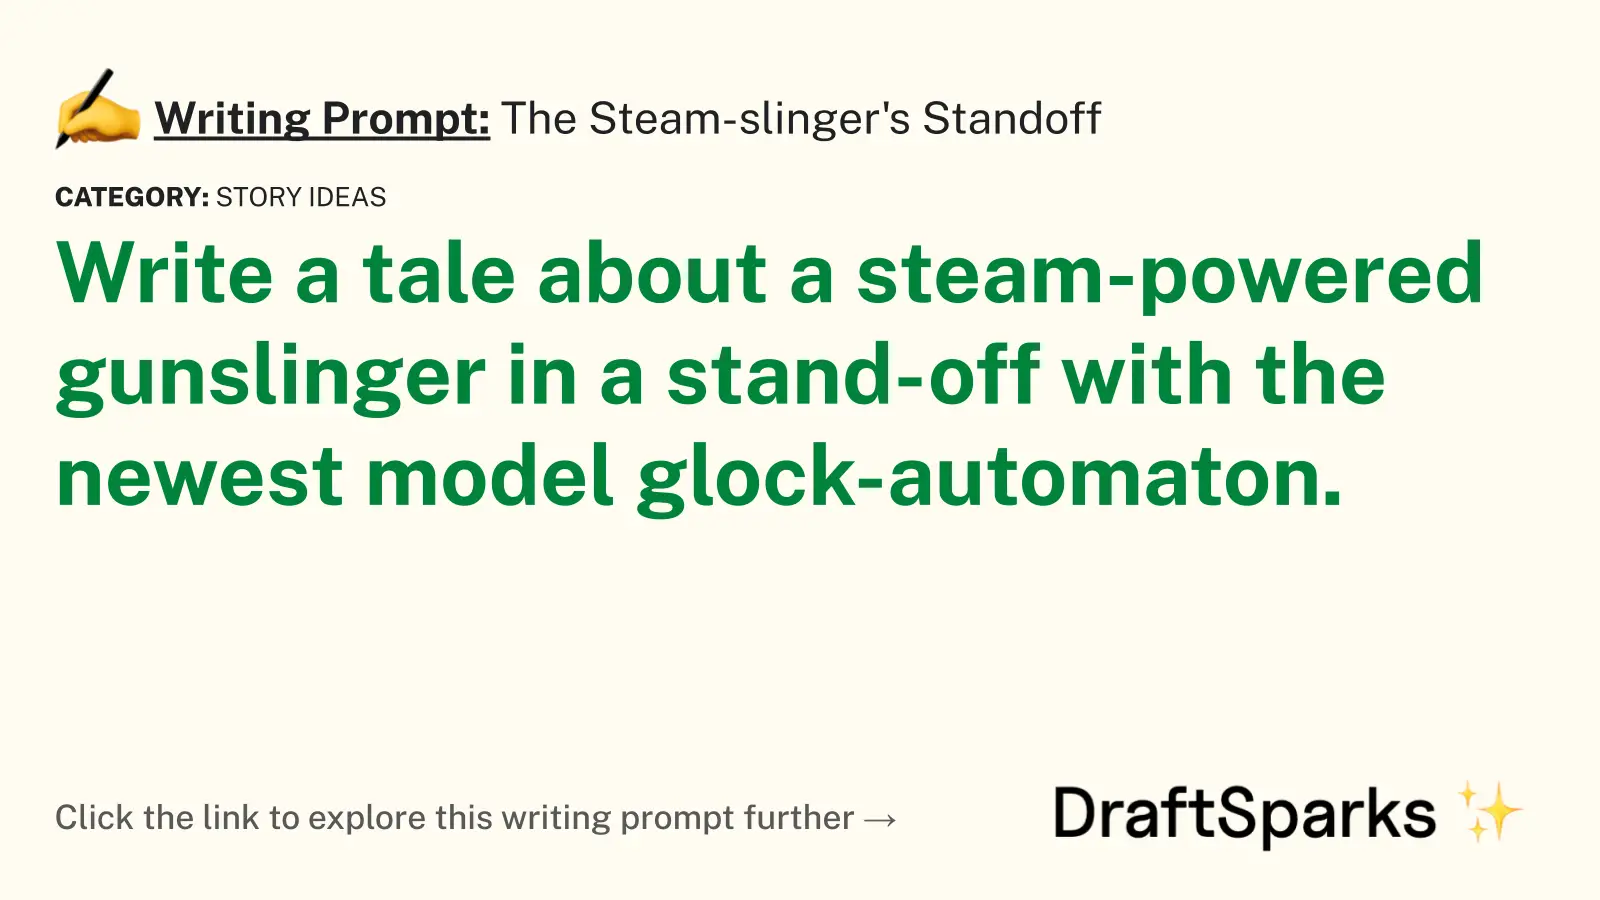 The Steam-slinger’s Standoff